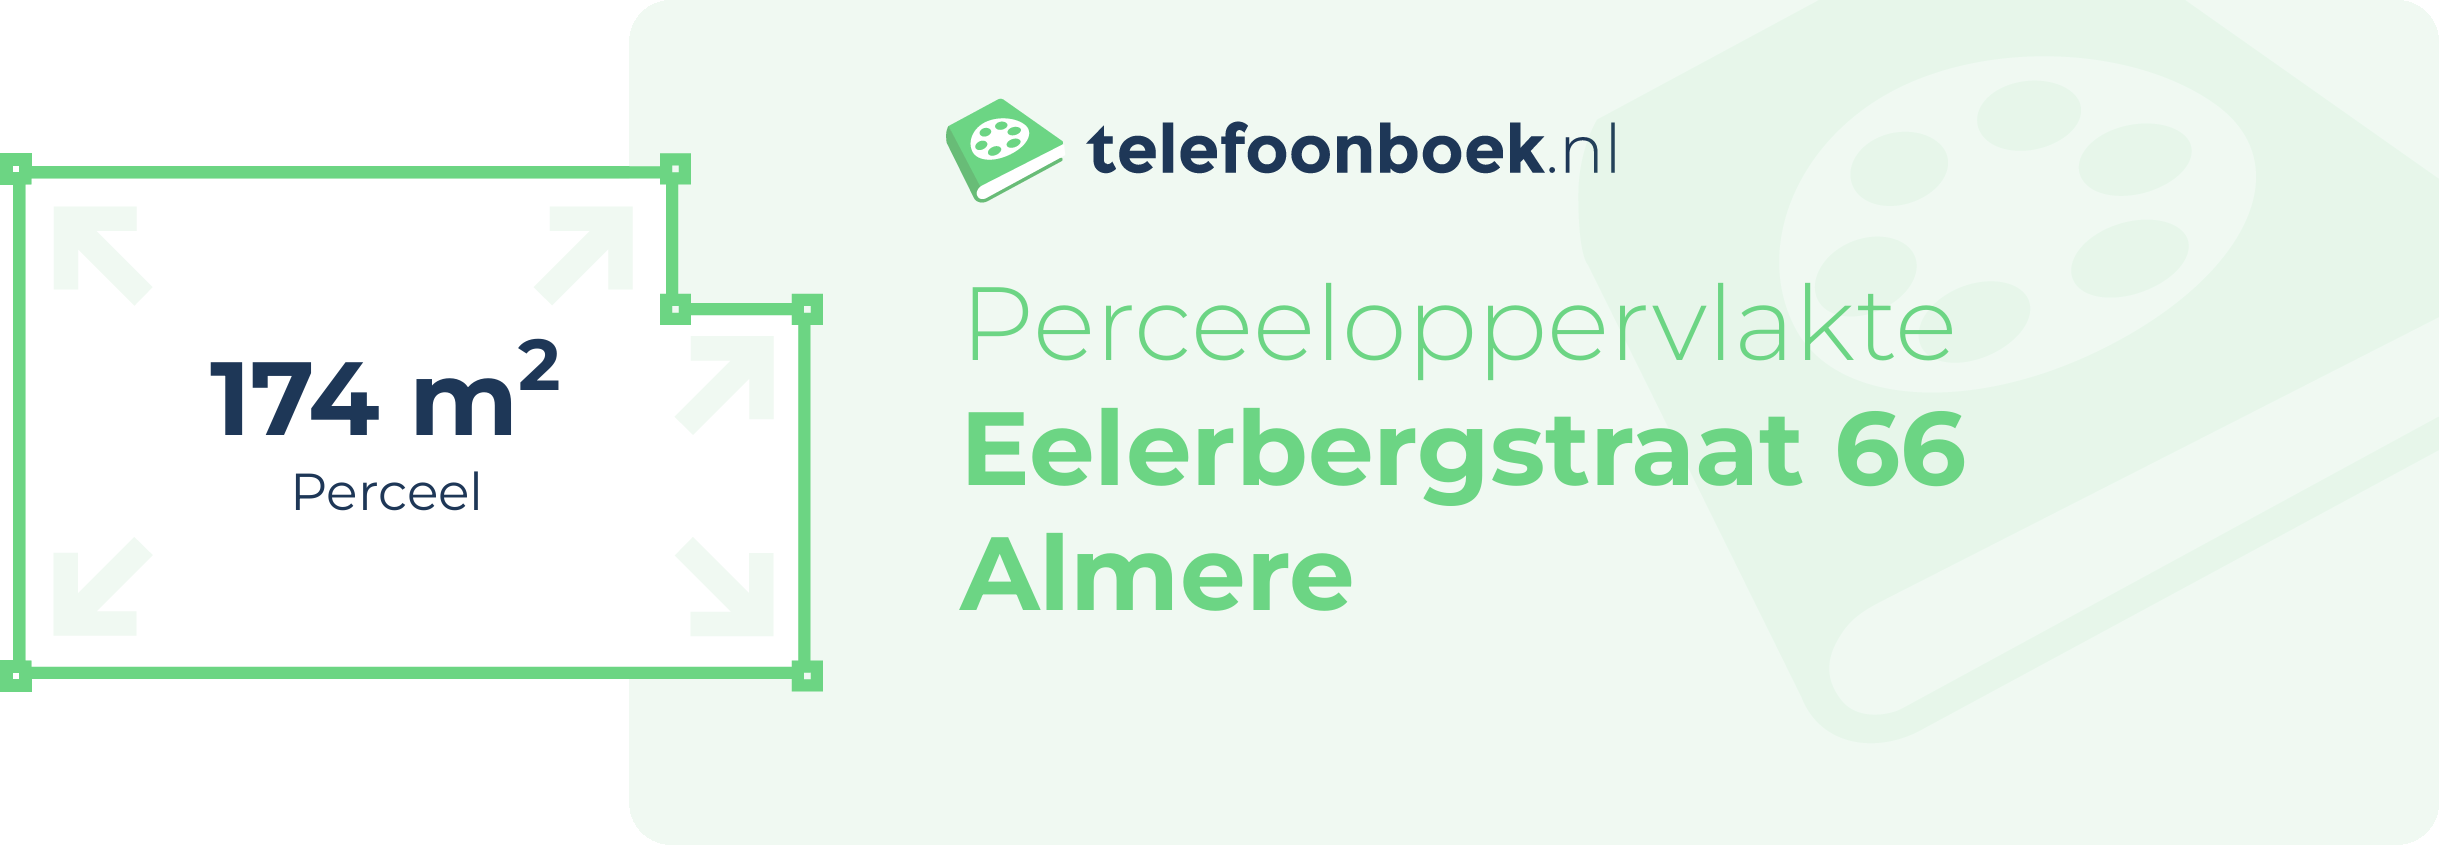 Perceeloppervlakte Eelerbergstraat 66 Almere